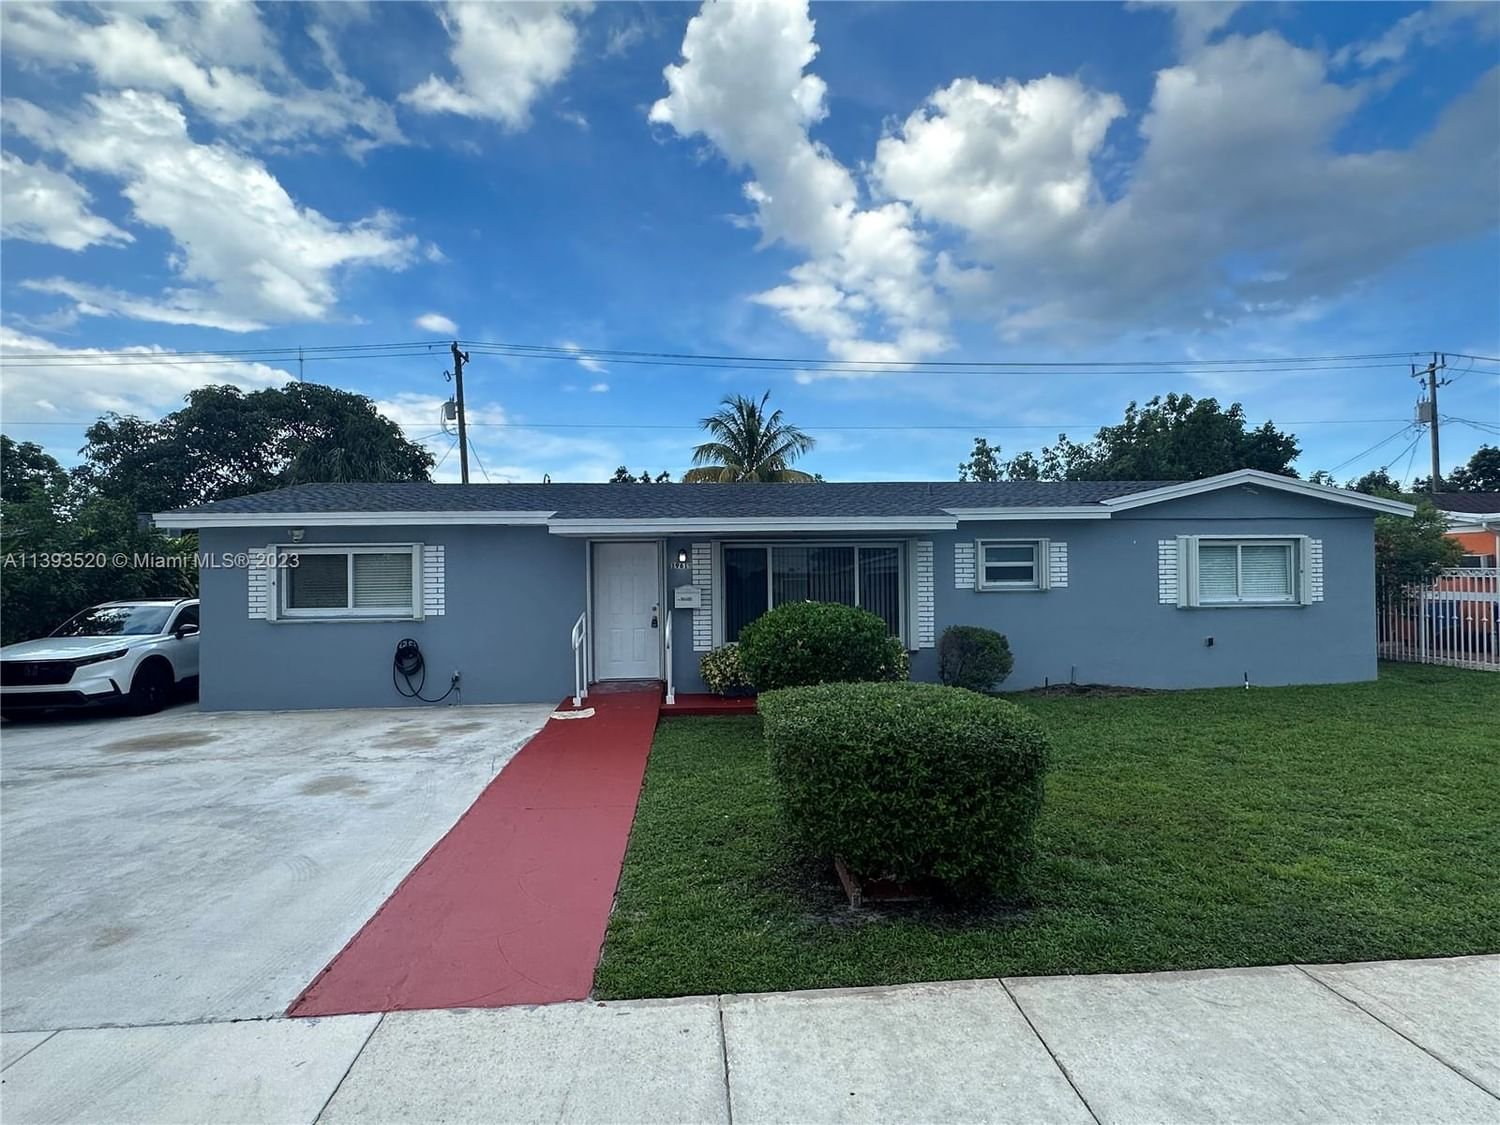 Real estate property located at 19615 12th Ct, Miami-Dade County, Miami Gardens, FL